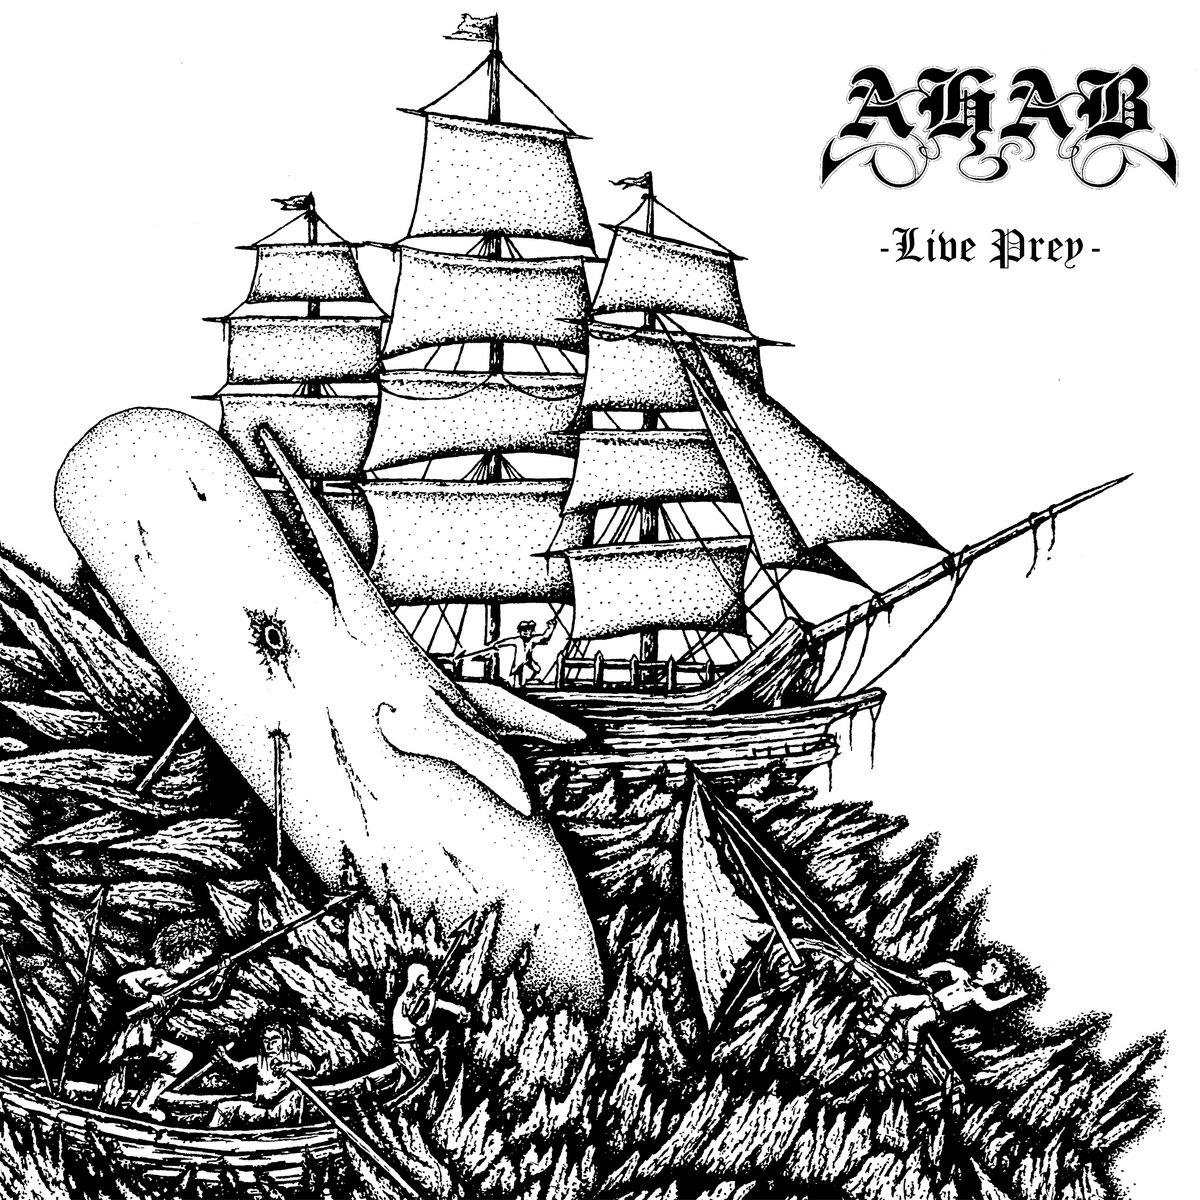 AHAB - Live Prey cover 